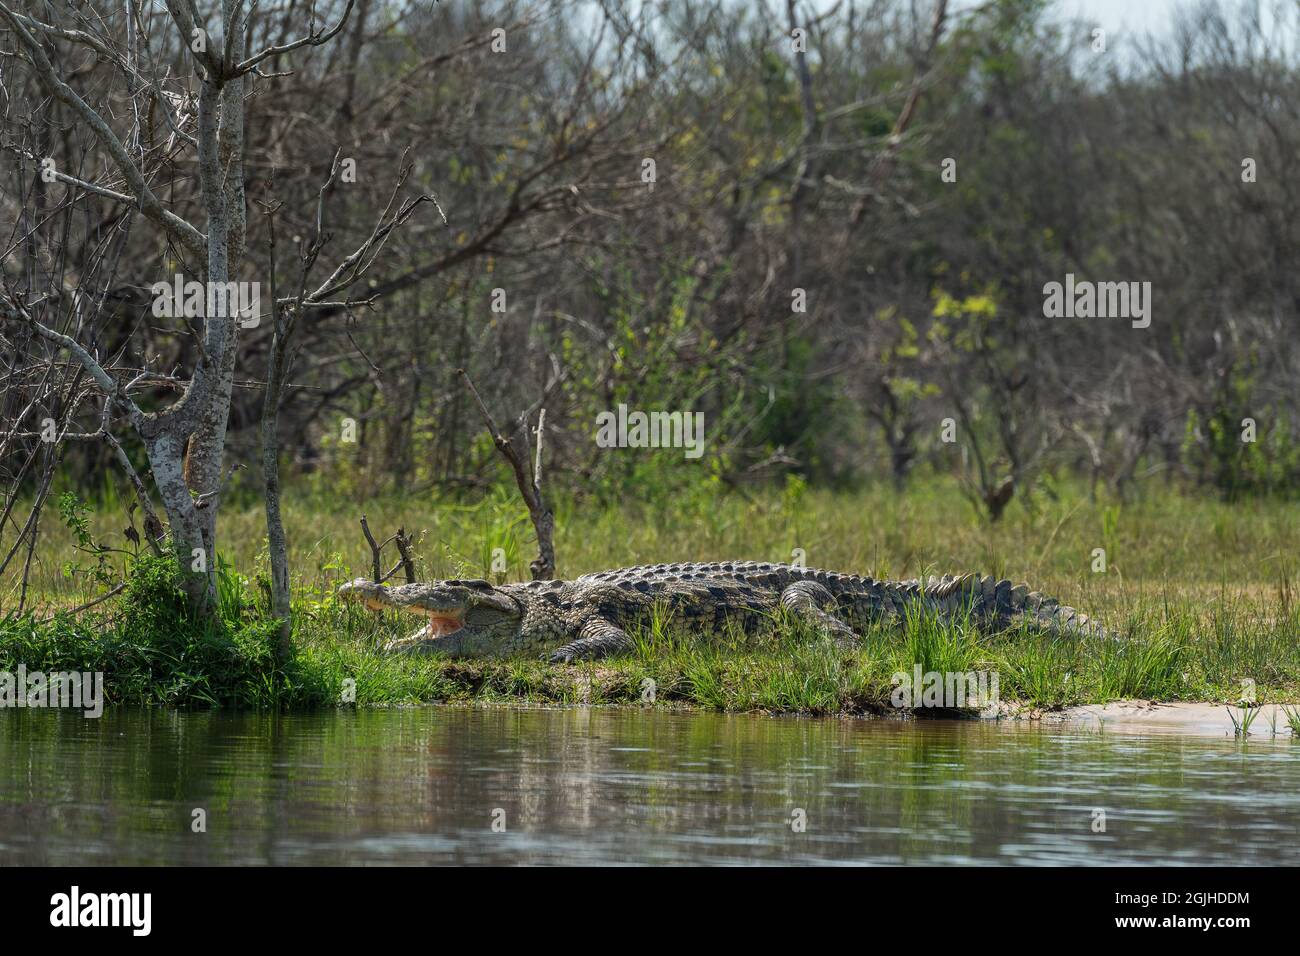 Nilkrokodil - Krokodil niloticus, großes Krokodil aus afrikanischen Seen und Flüssen, Nil, Murchison Falls, Uganda. Stockfoto